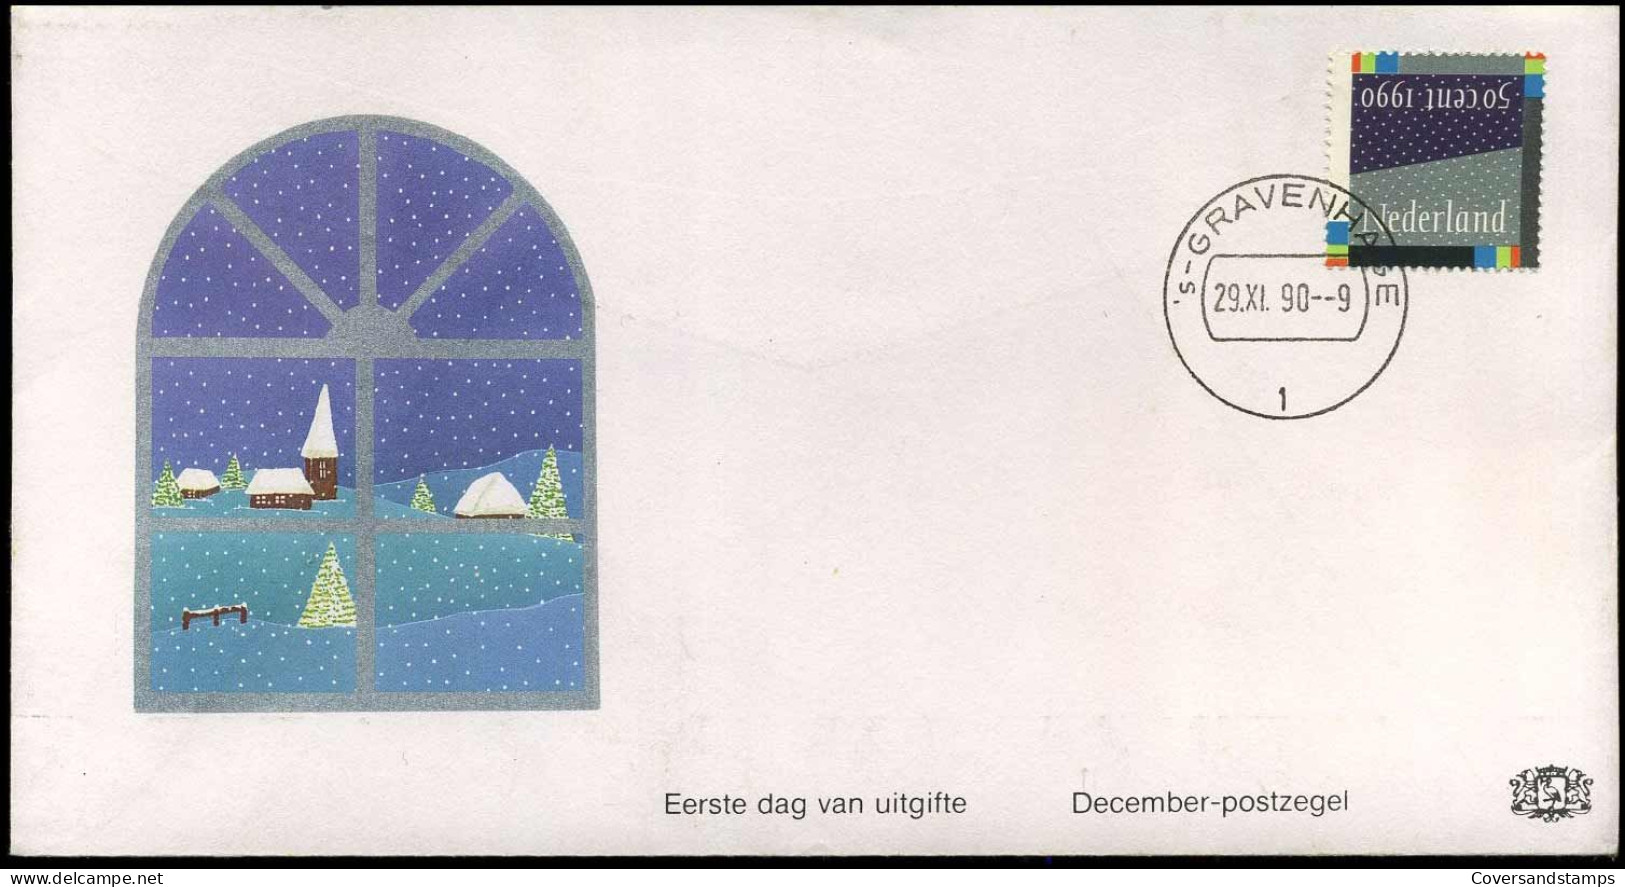 FDC - December Postzegel 1990 - FDC